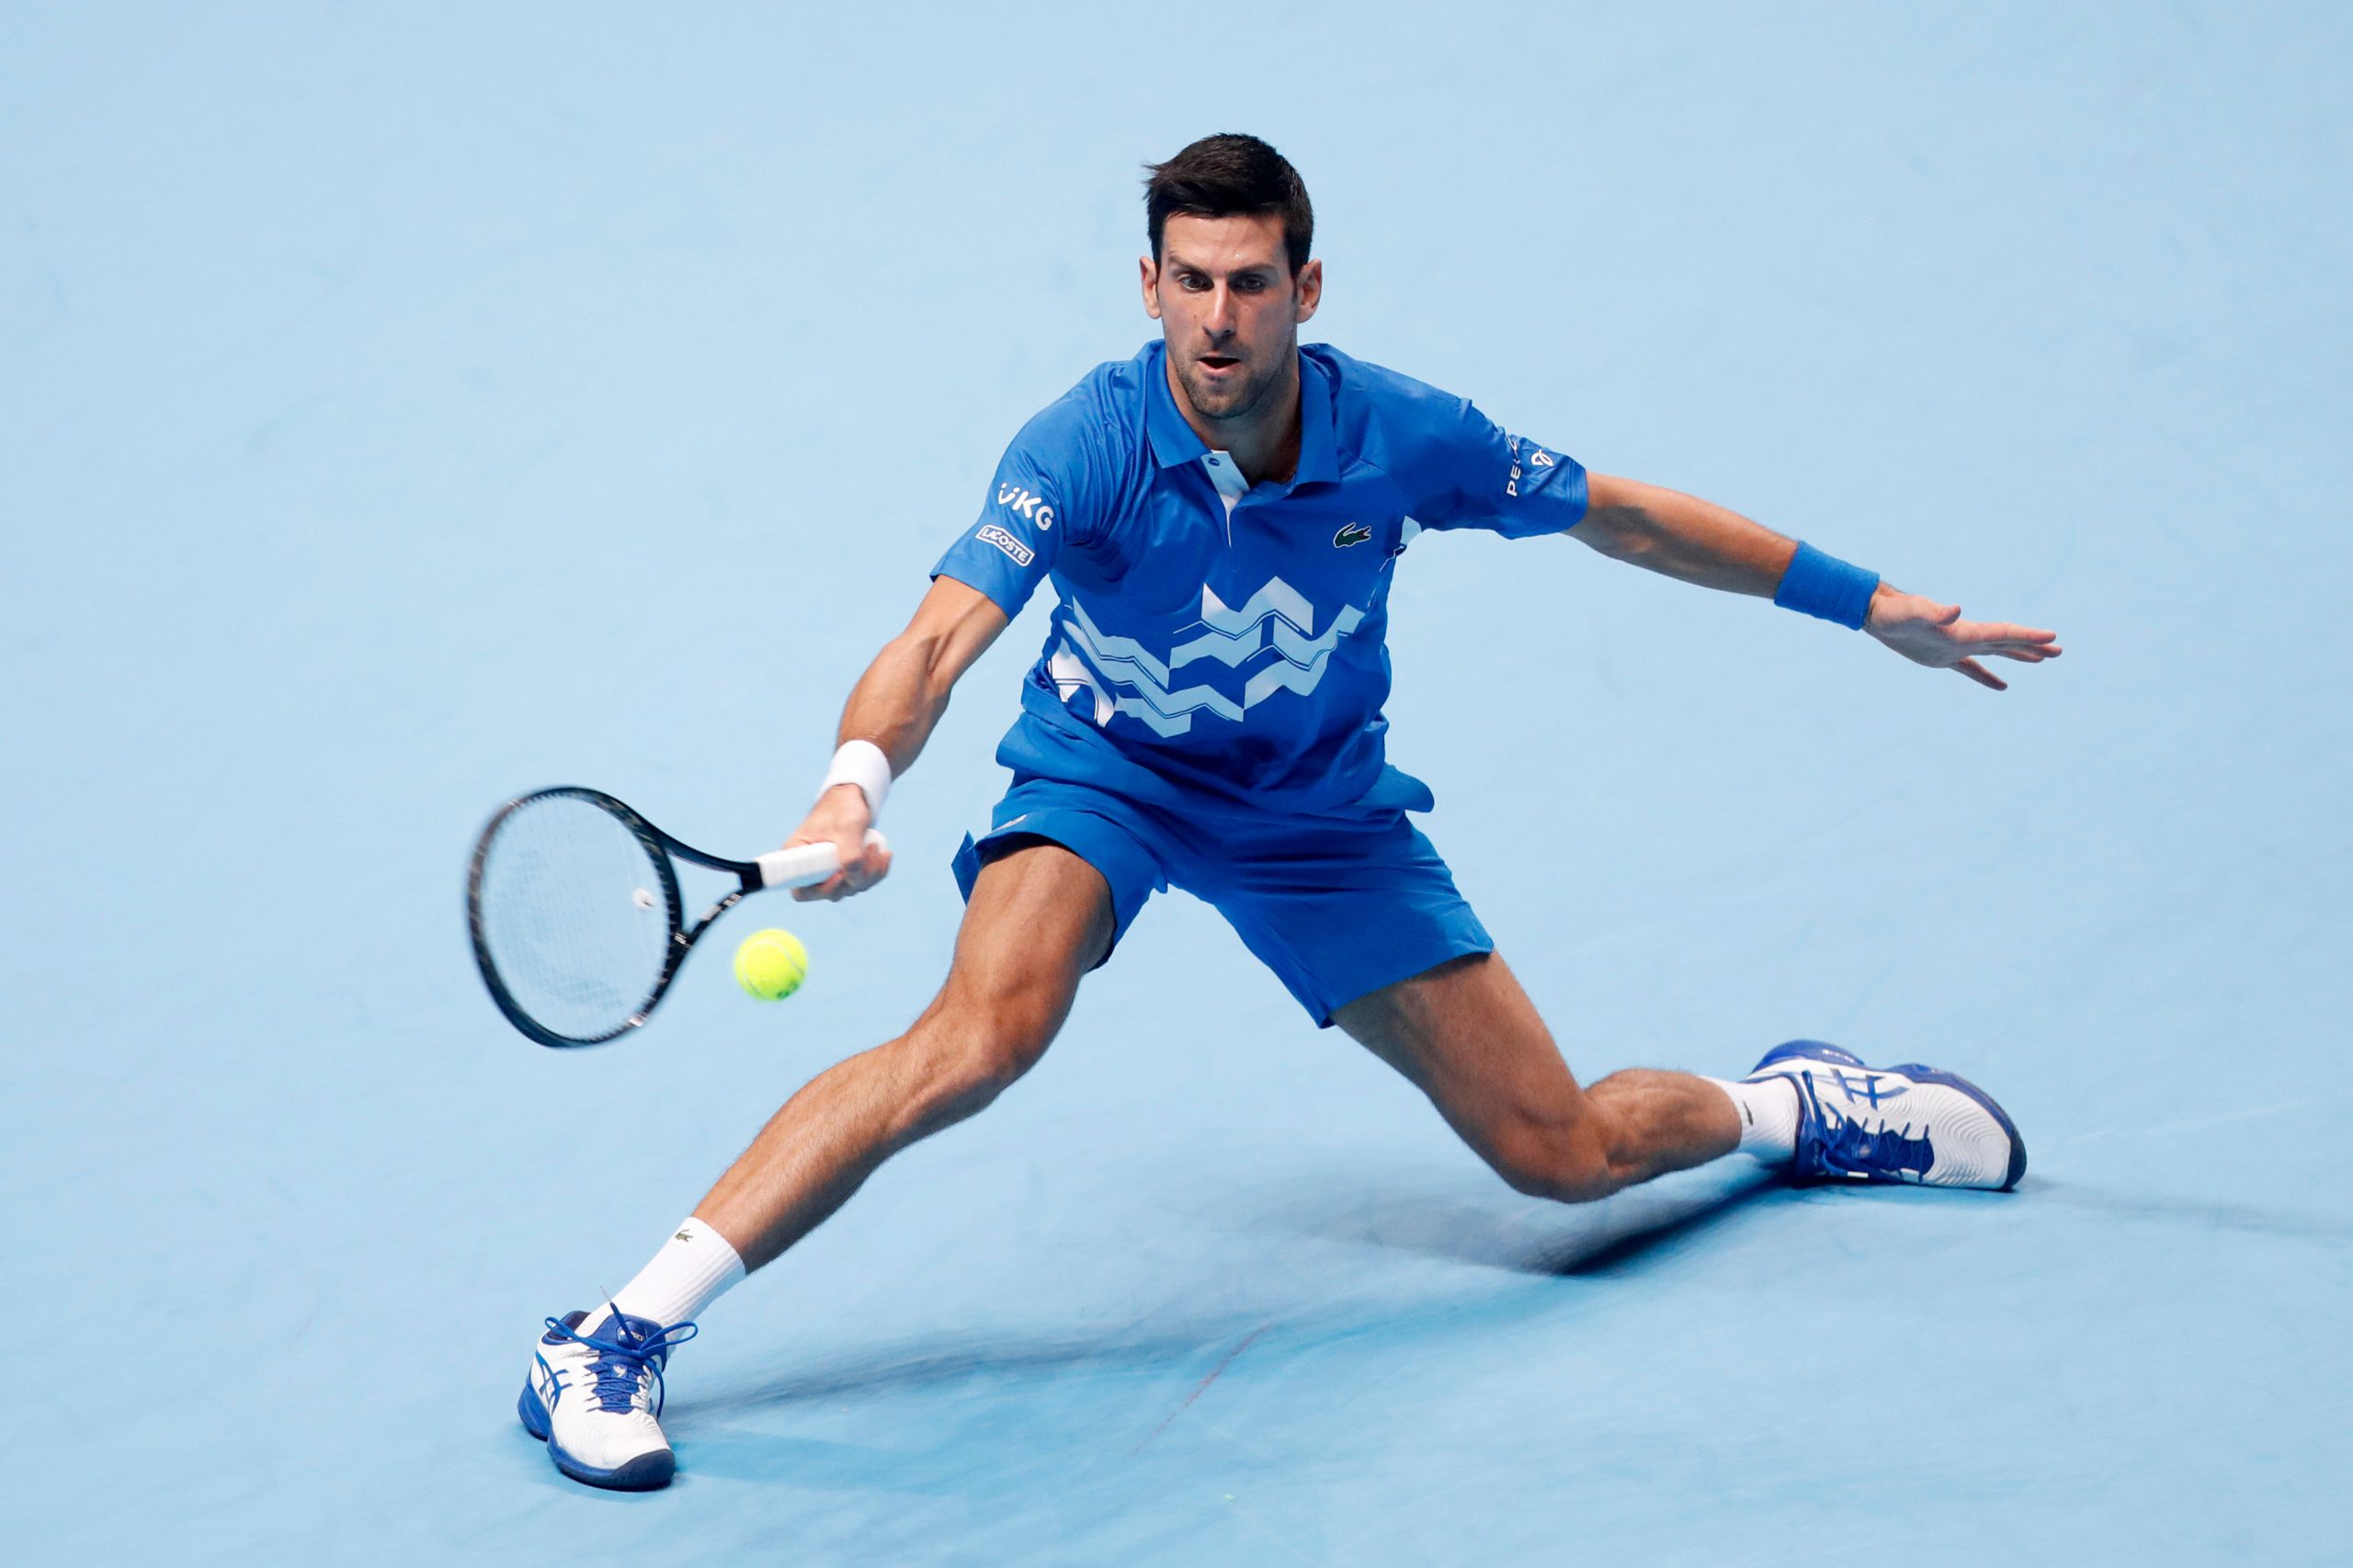 10% crowd at Australian Open would be huge, says tennis ace Novak Djokovic